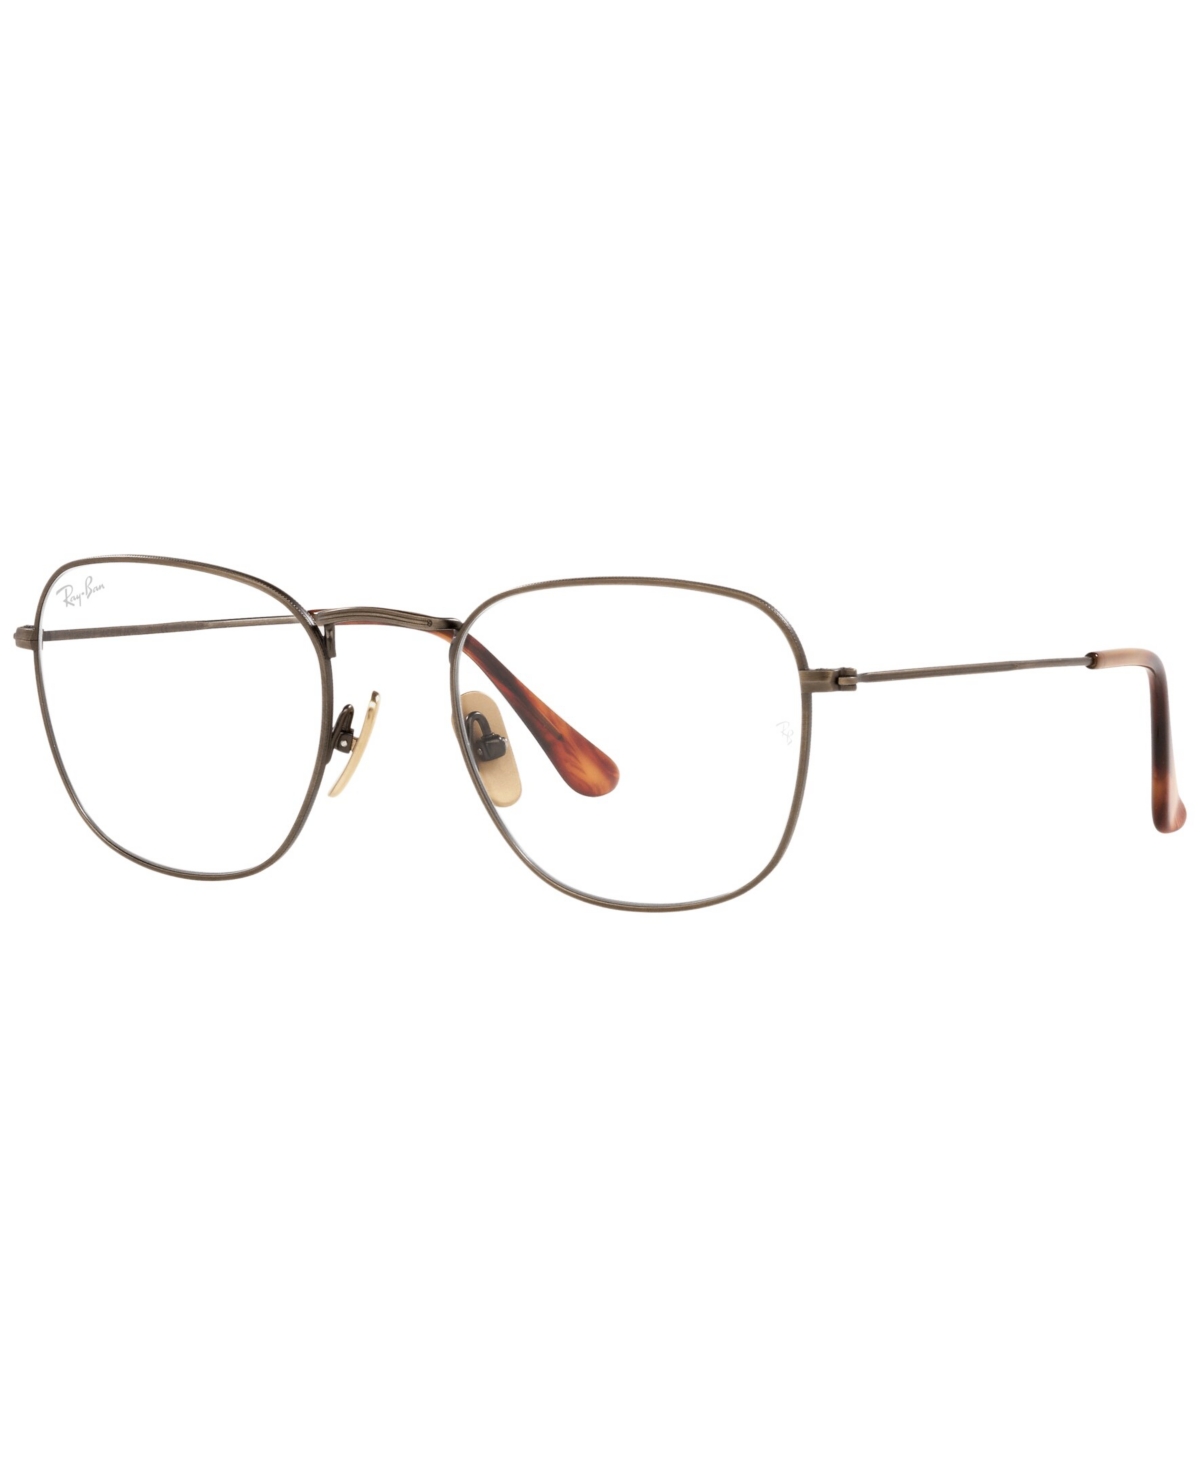 RX8157 Frank Titanium Optics Men's Square Eyeglasses - Demigloss Antique Gold-Tone